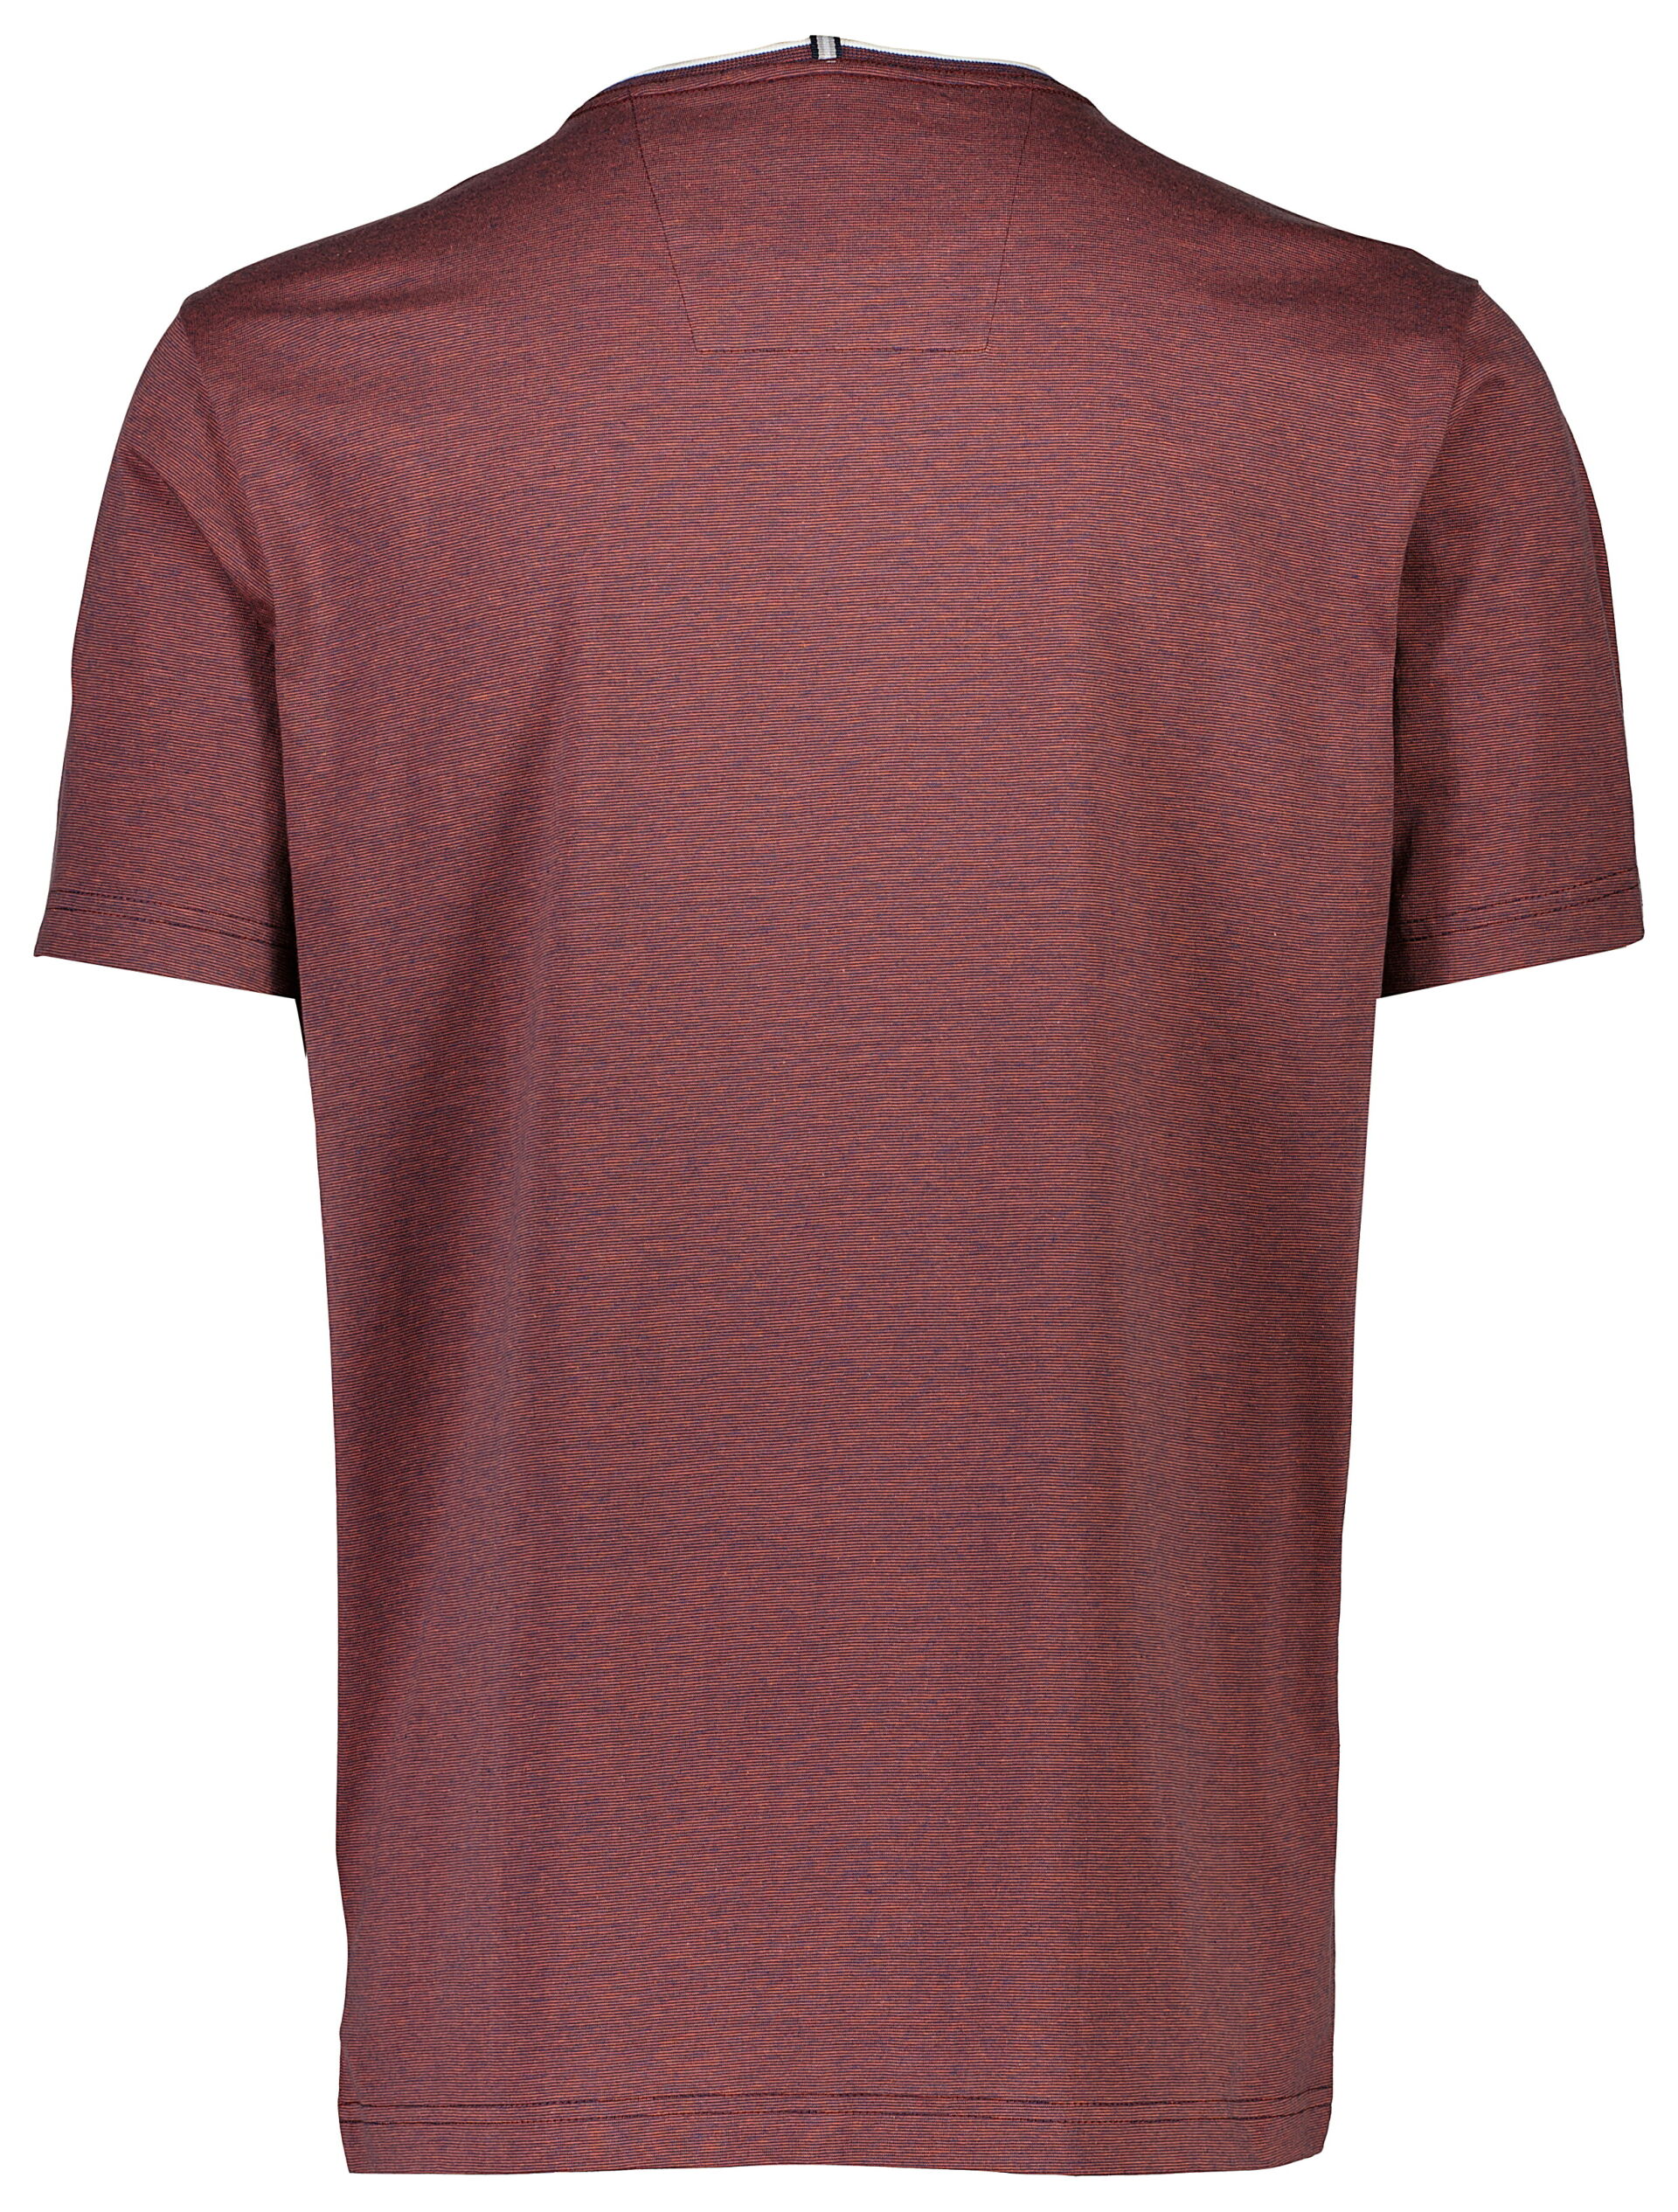 Bison  T-shirt 80-400093